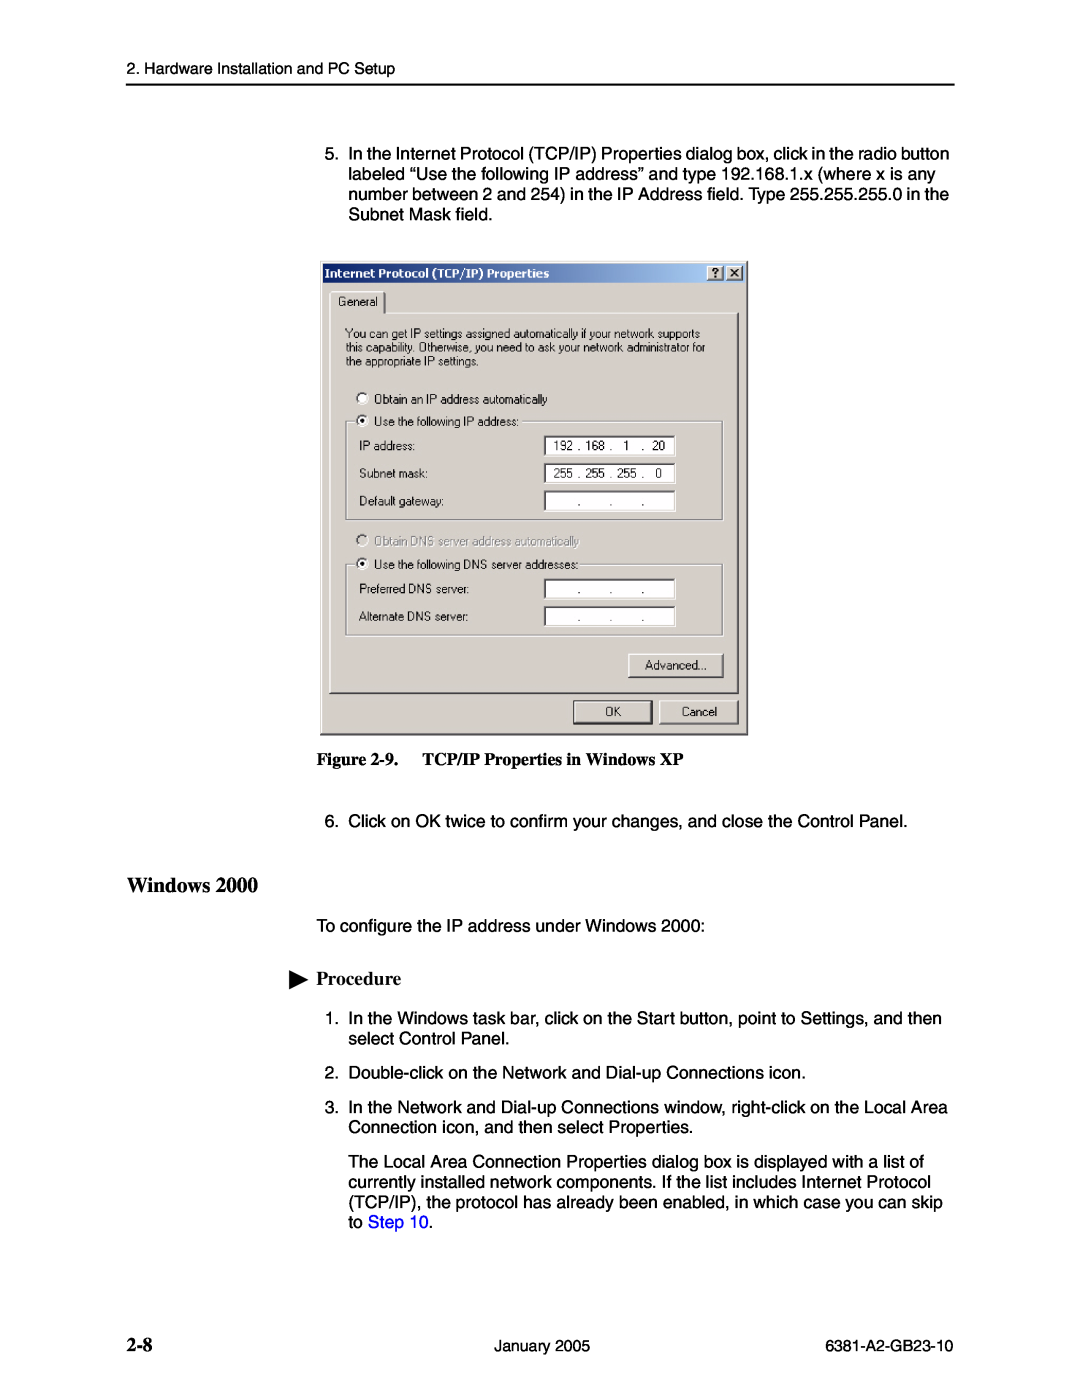 Paradyne 6381-A3 manual 9. TCP/IP Properties in Windows XP, Procedure 